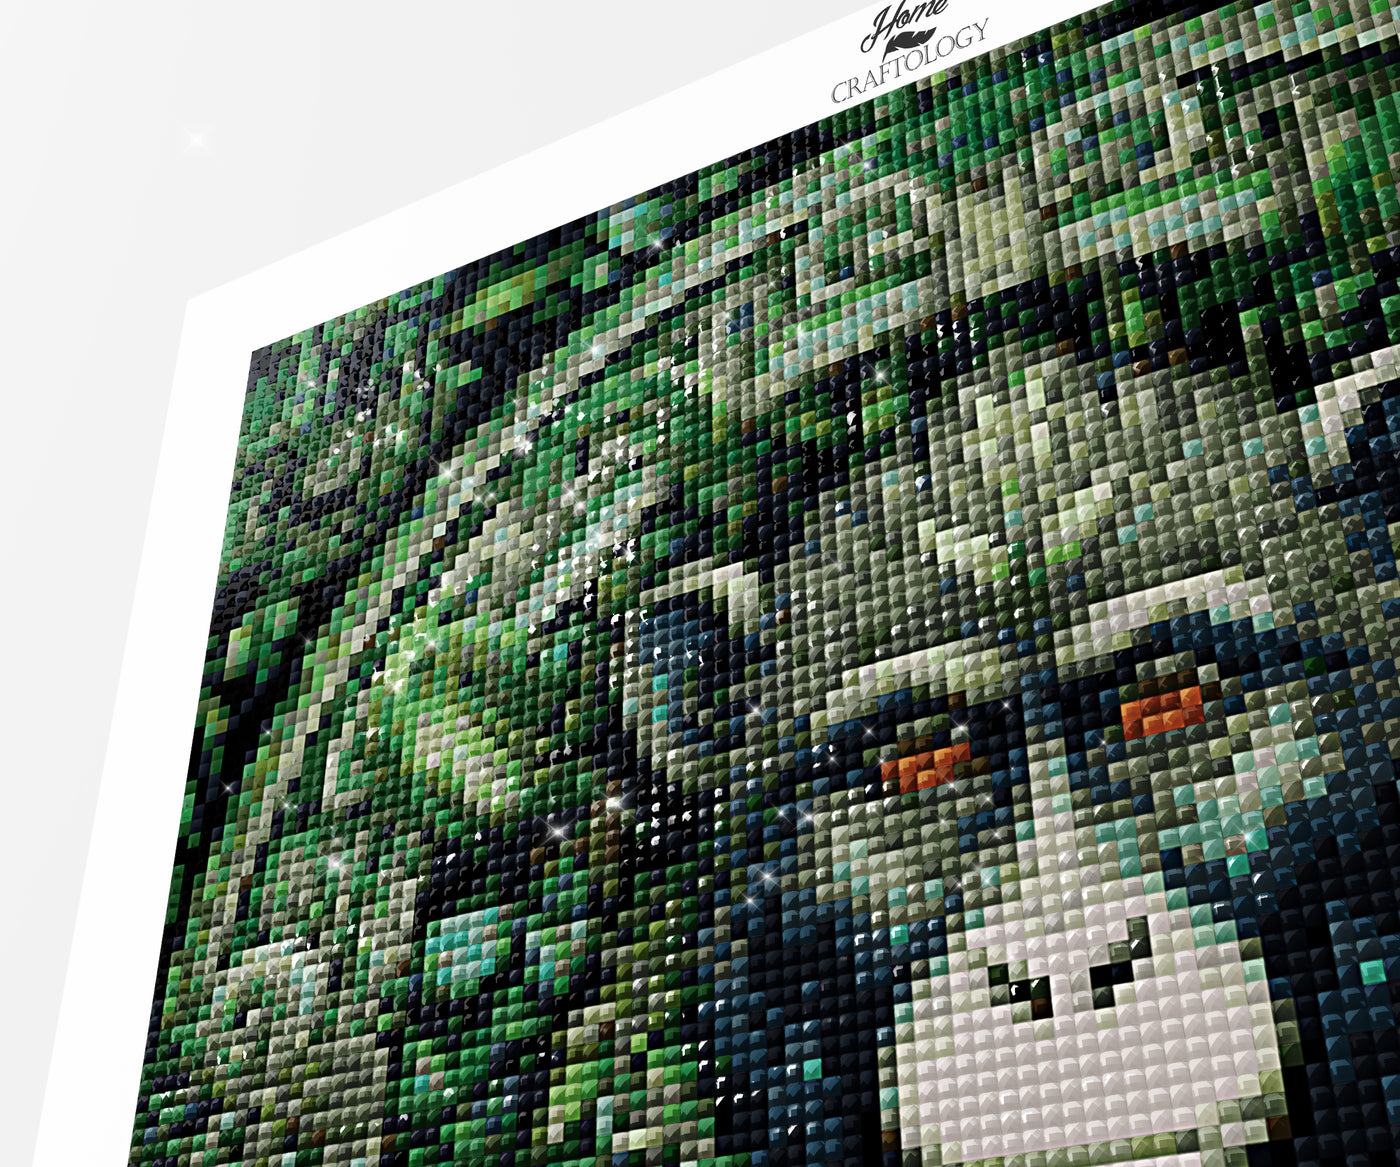 Monkey Forest Mandala - Premium Diamond Painting Kit